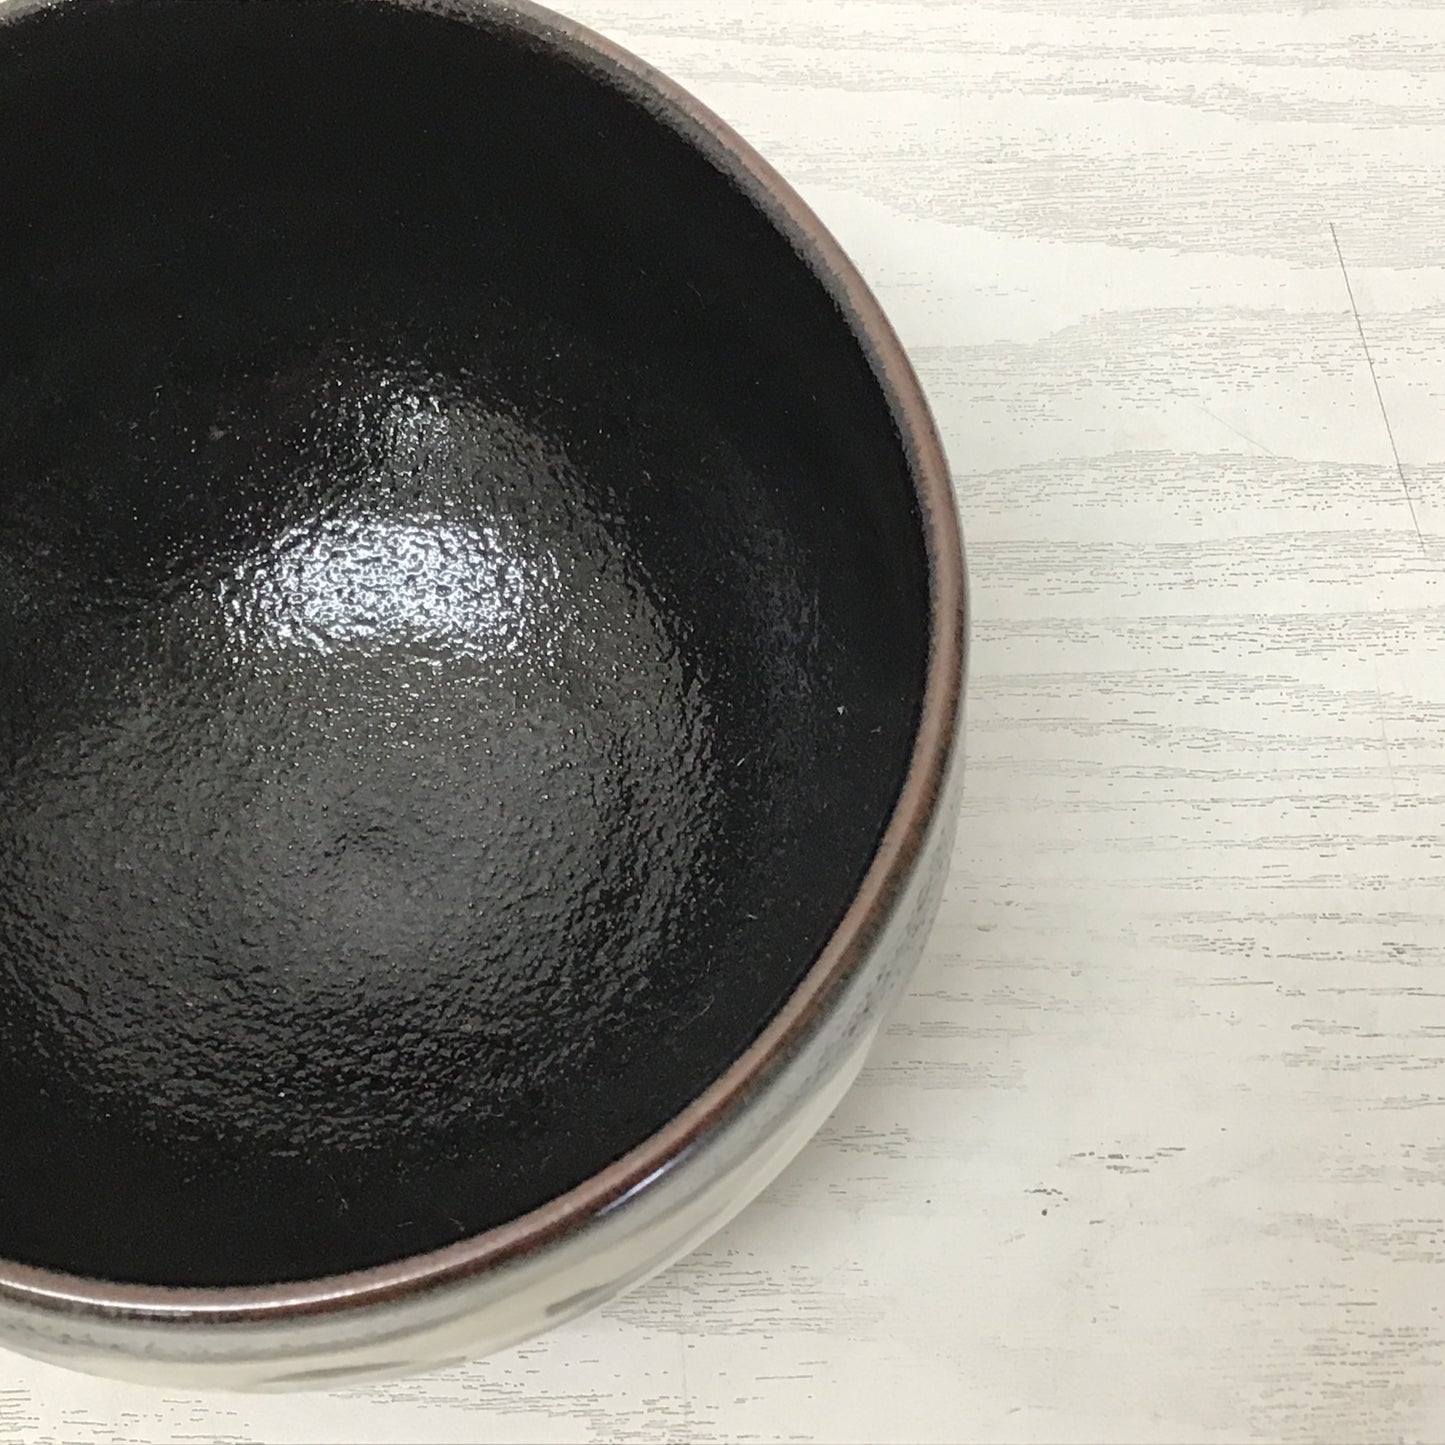 Y1575 CHAWAN Tokoname-ware signed box Japanese bowl pottery Japan tea ceremony